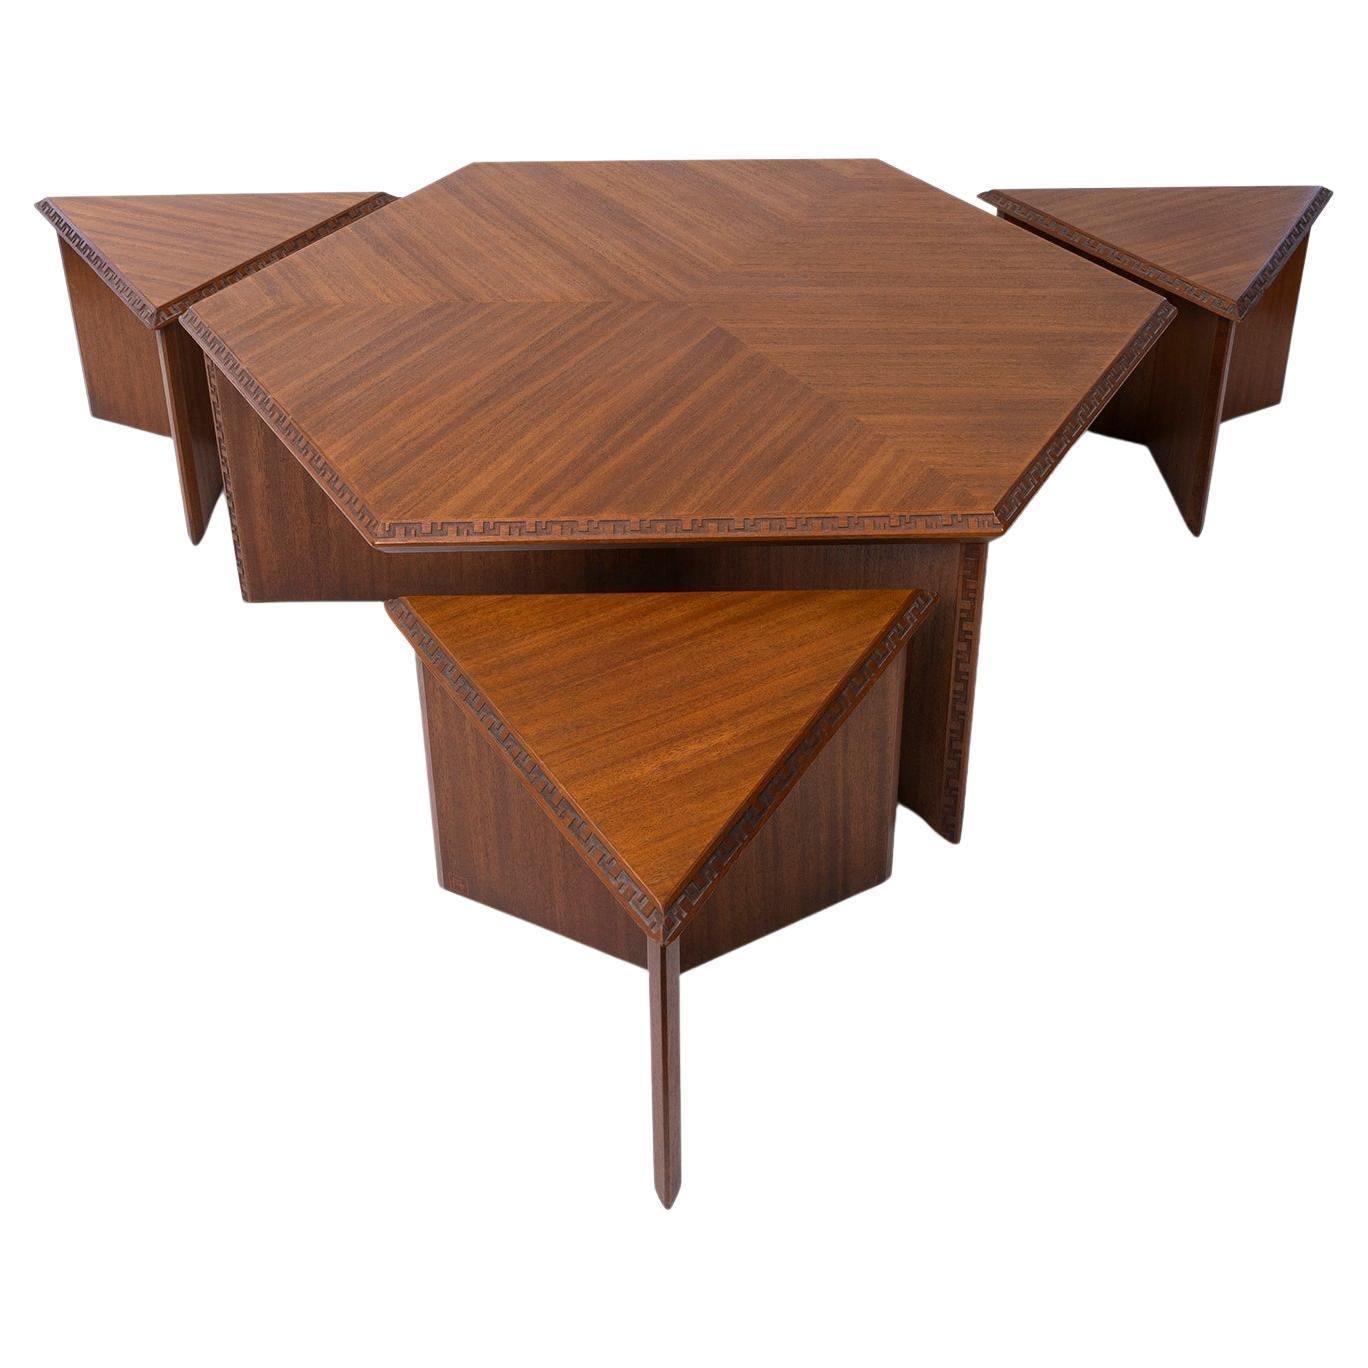 Did Frank Lloyd Wright make furniture?